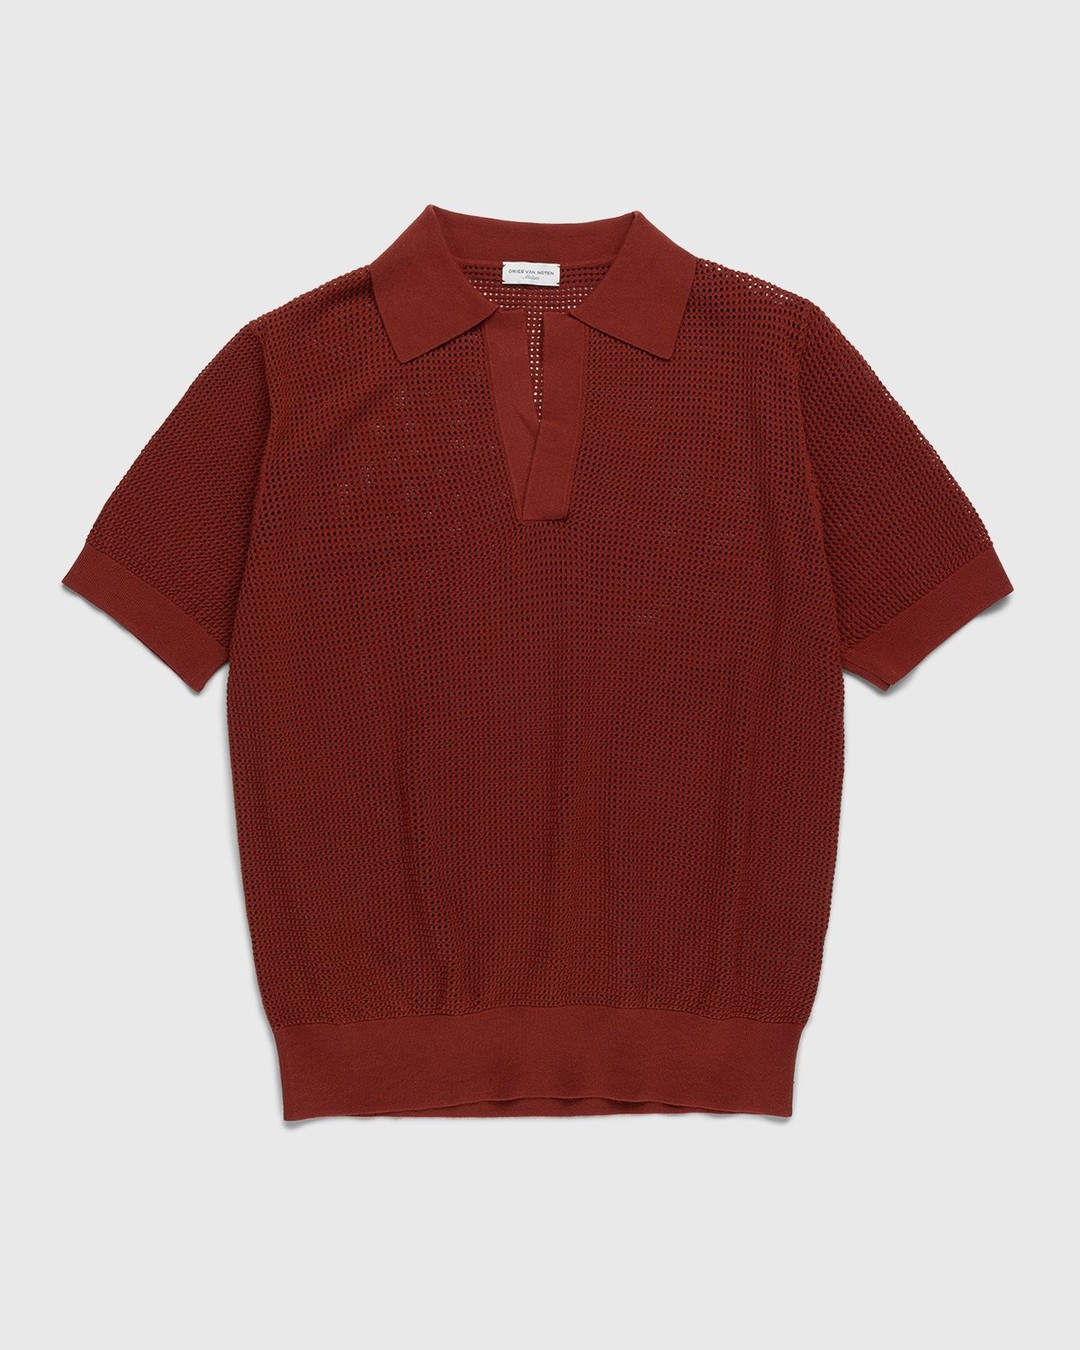 Dries van Noten – Jael Polo Shirt Brique - Polos - Red - Image 1